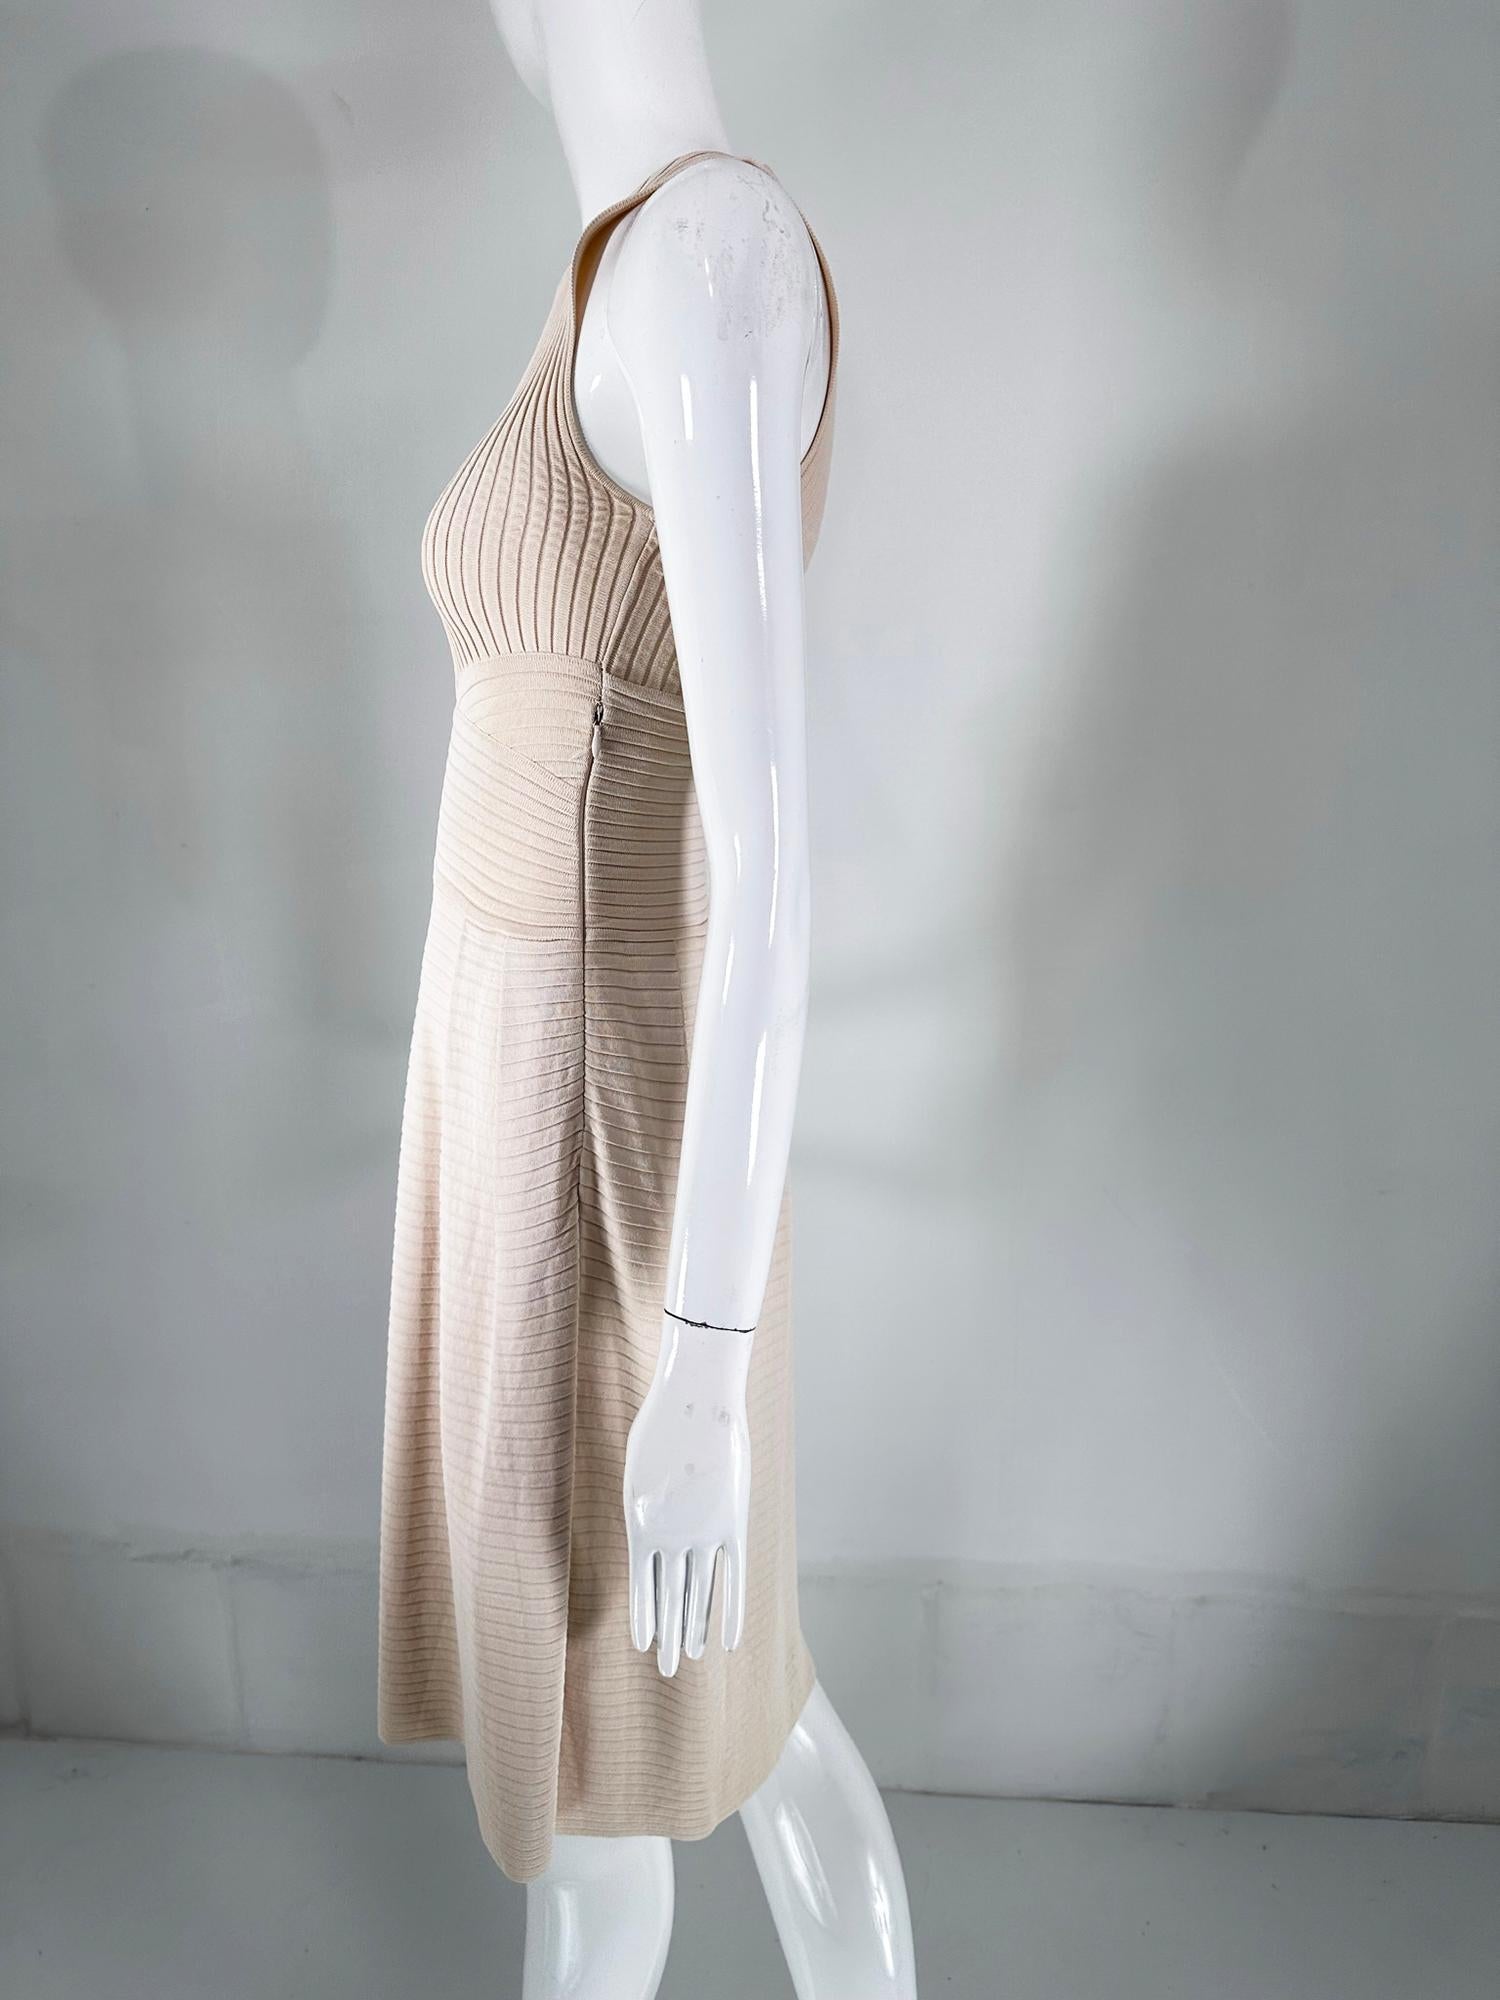 Christian Dior Paris Ribbed Knit Beige Tank Dress 2010 For Sale 8